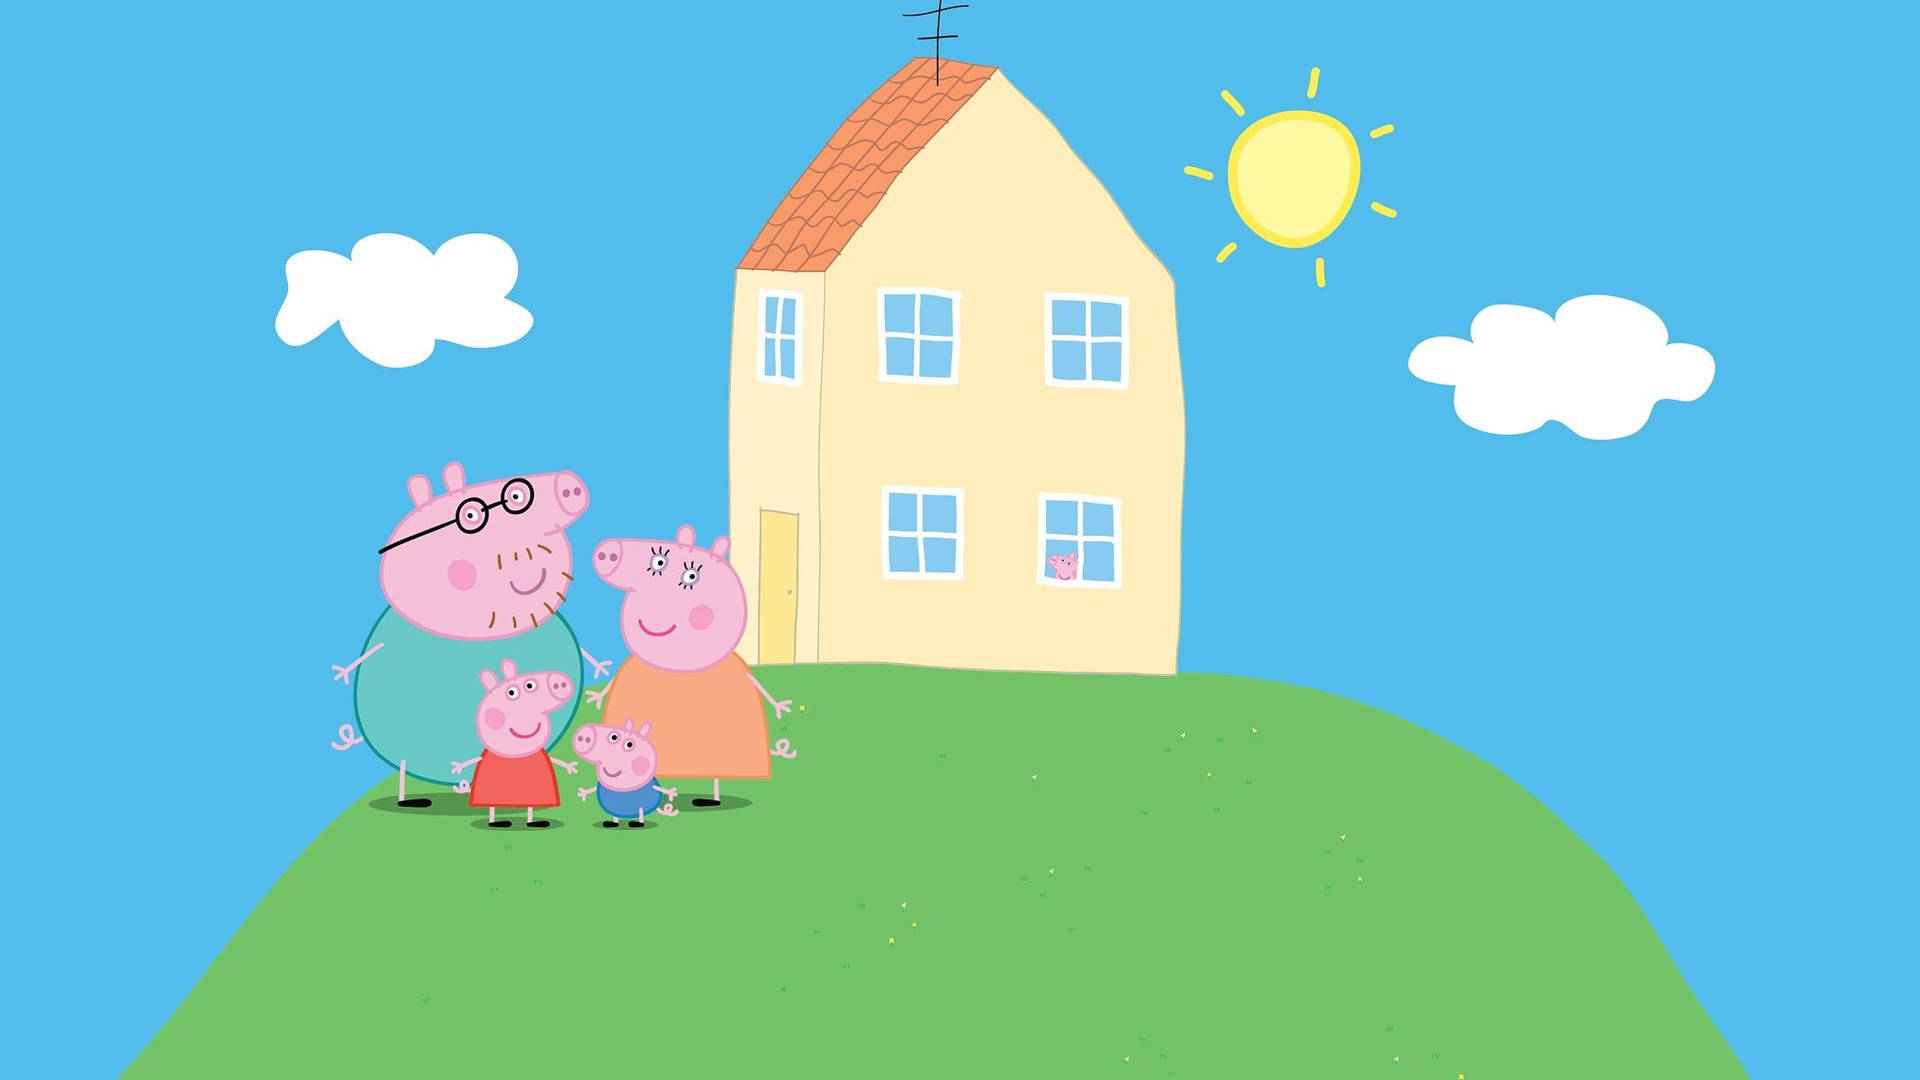 Peppa Pig Home Cartoon Network Characters